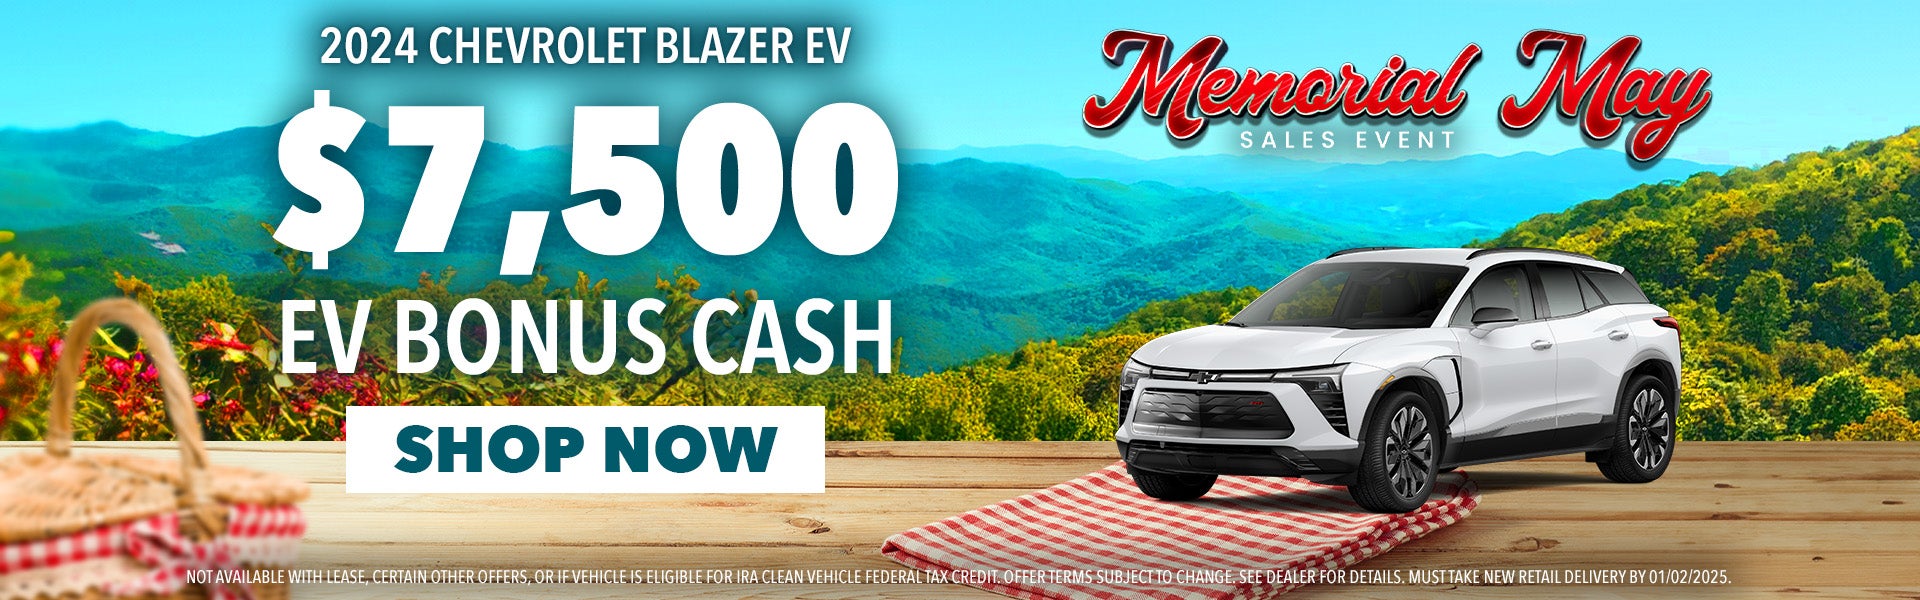 $7,500 bonus cash on 2024 Chevrolet Blazer EV